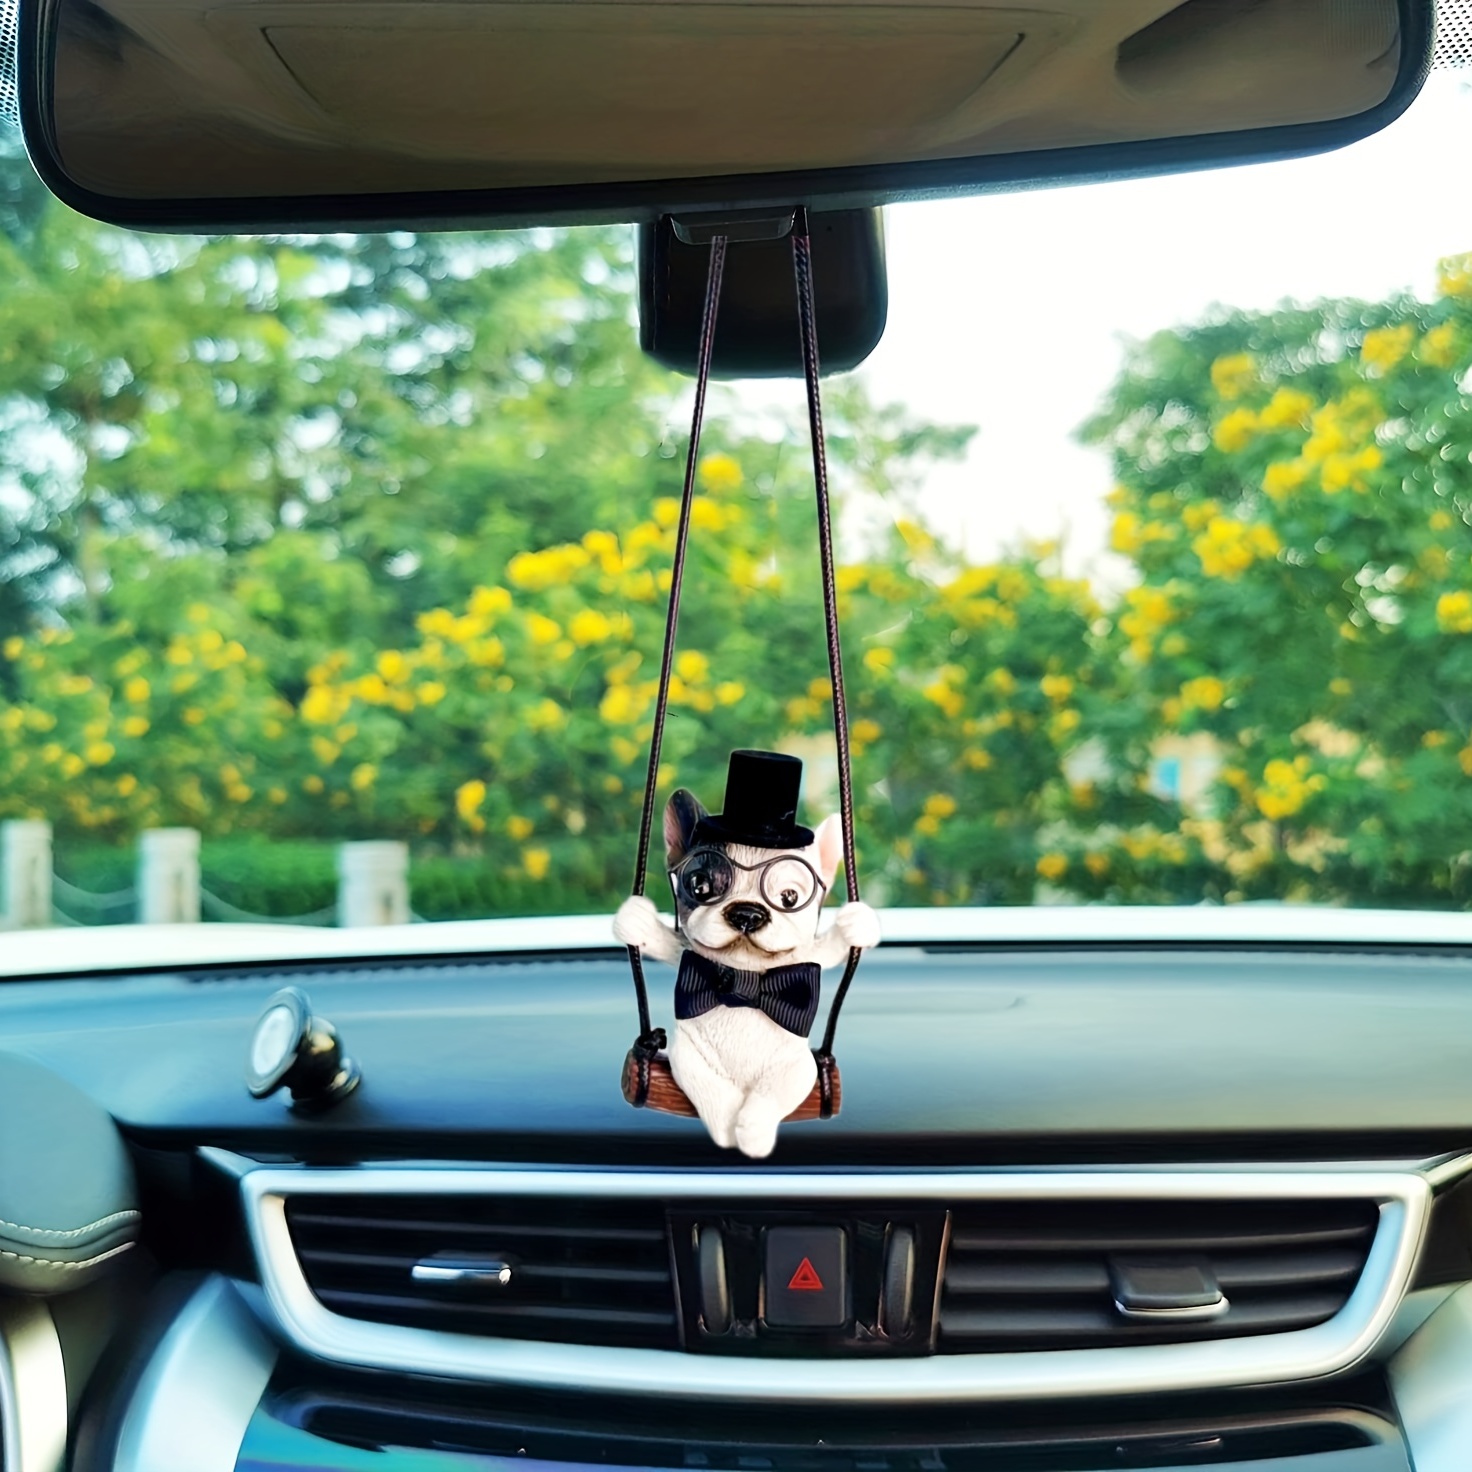 Bulldog Car Pendant Interior, Resin Animal Figurines Car Mirror